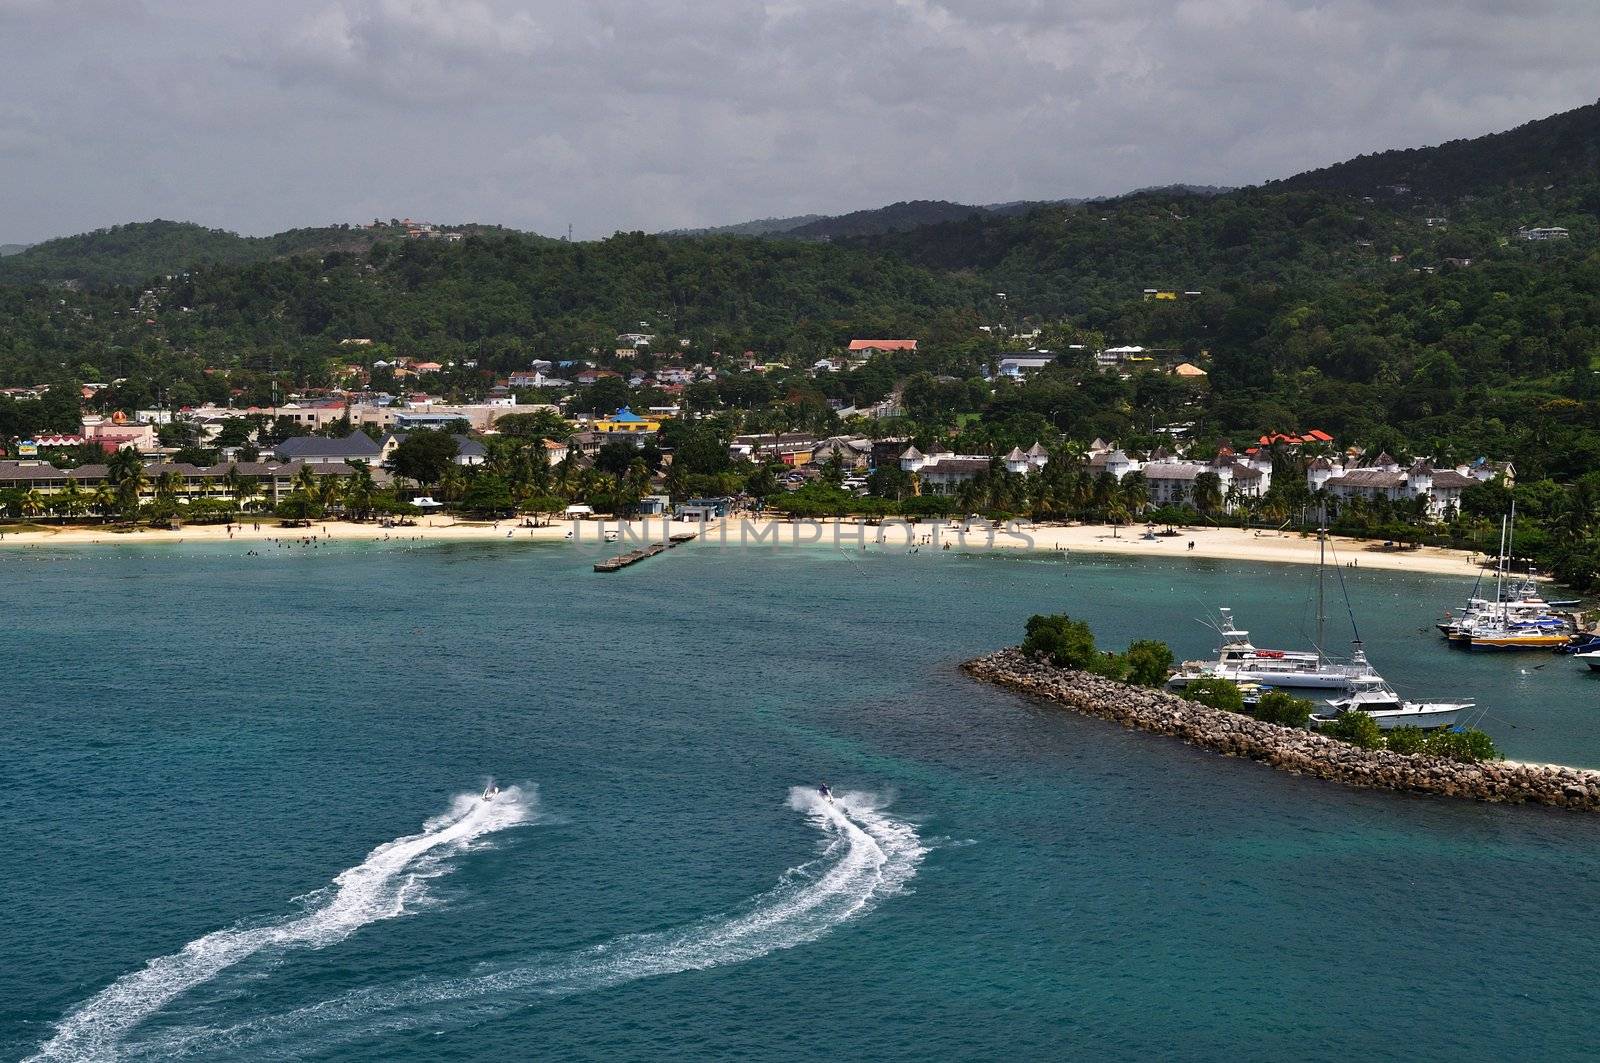 Waverunners in Ocho Rios, Jamaica by fernando2148